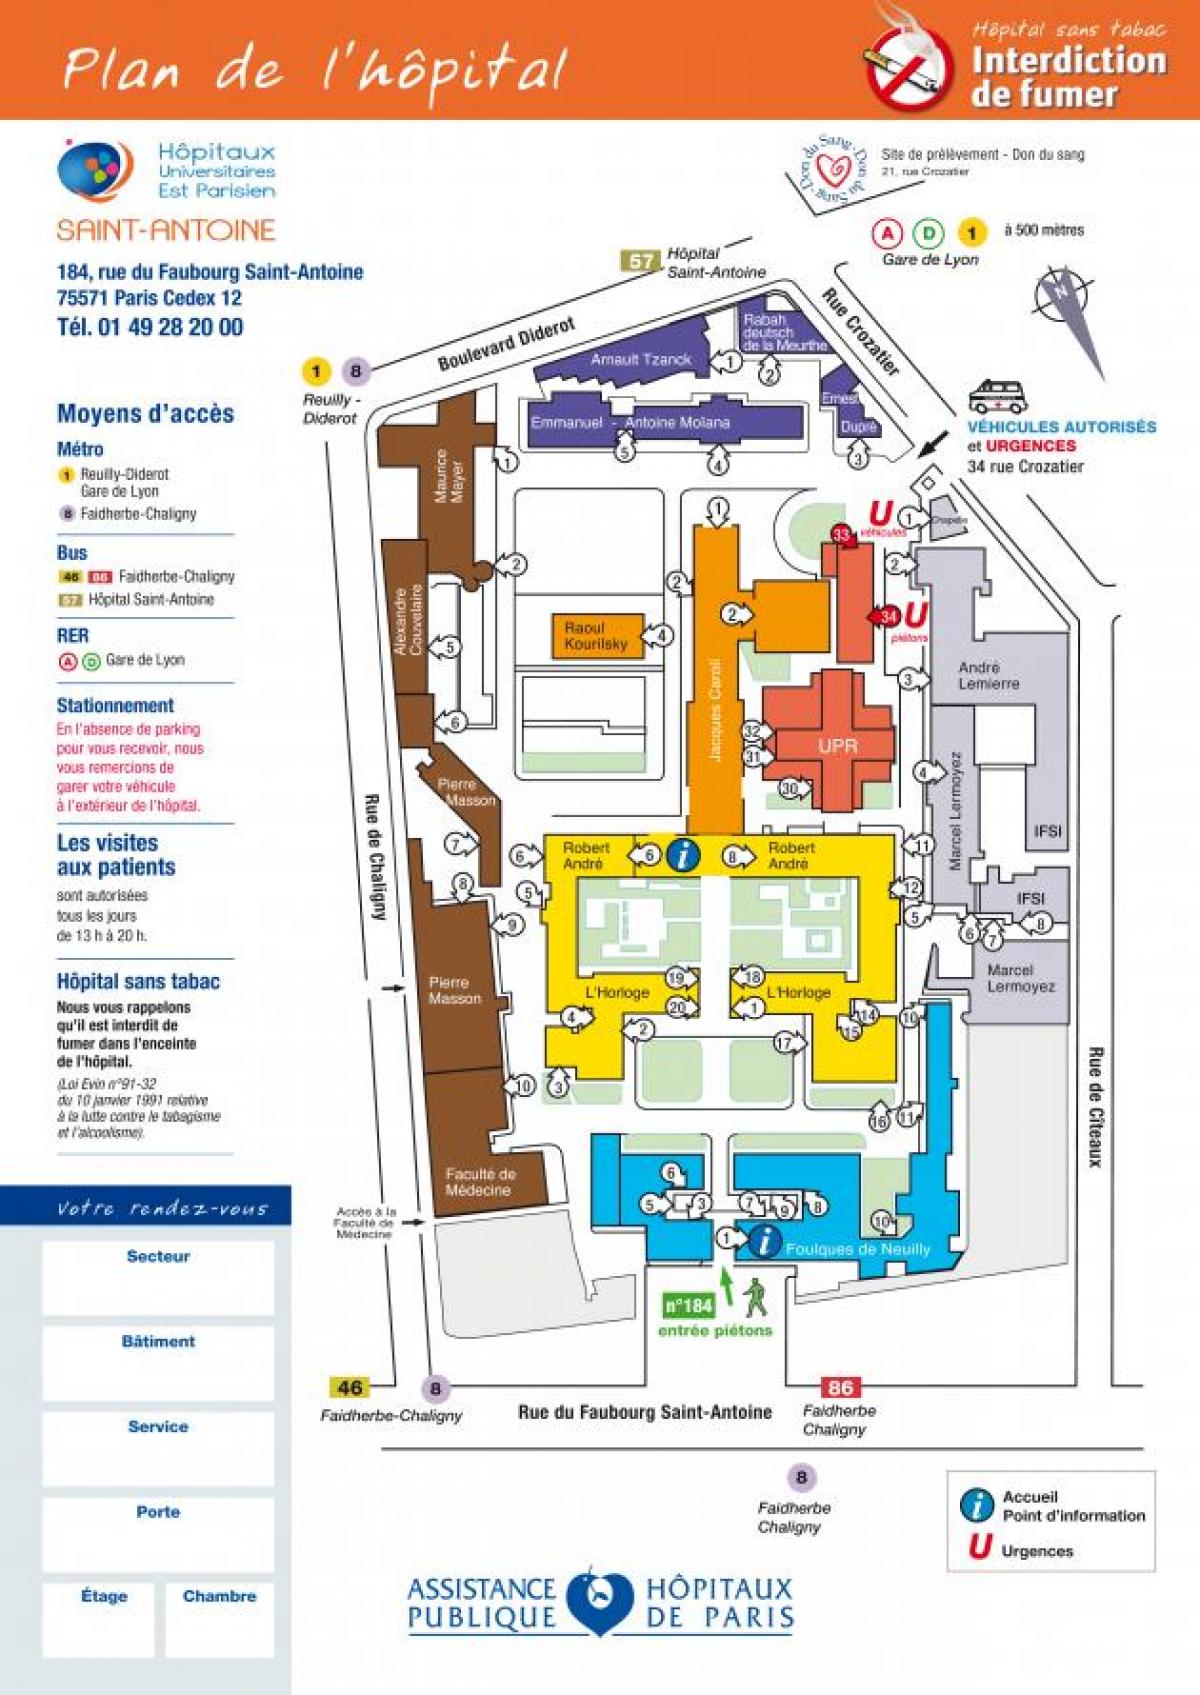 Map of Saint-Antoine hospital